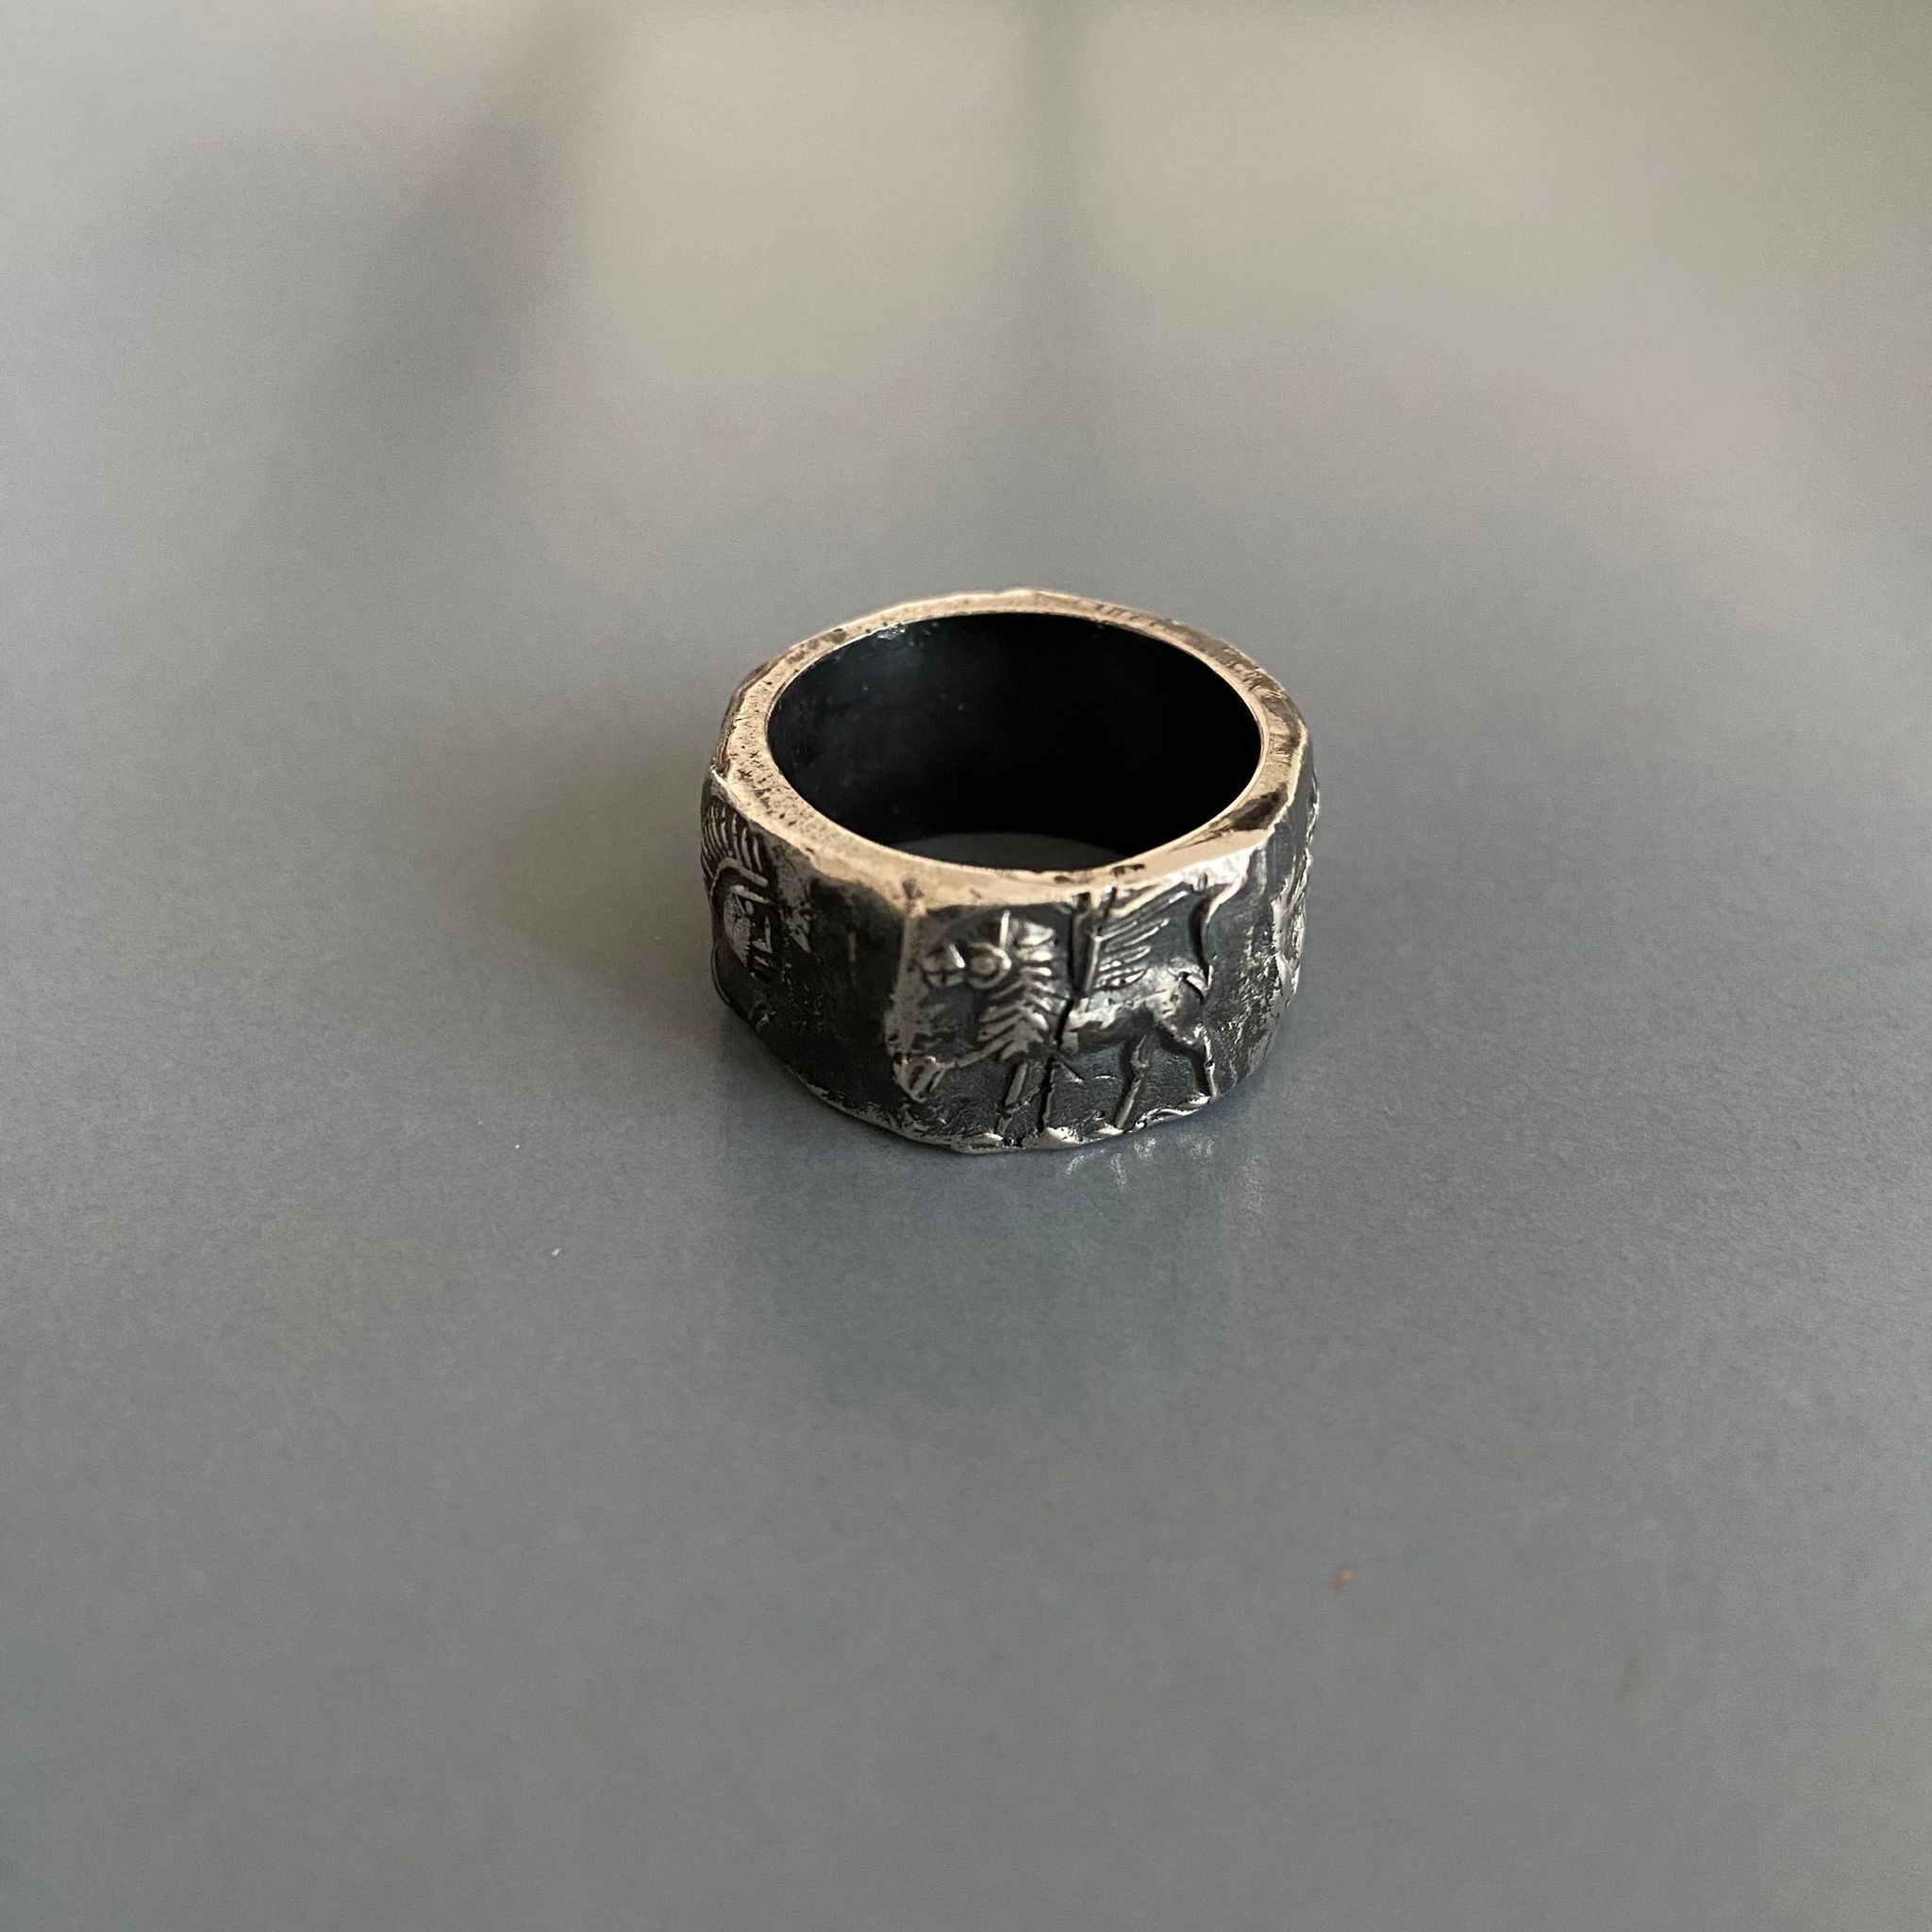 Past Men's Ring